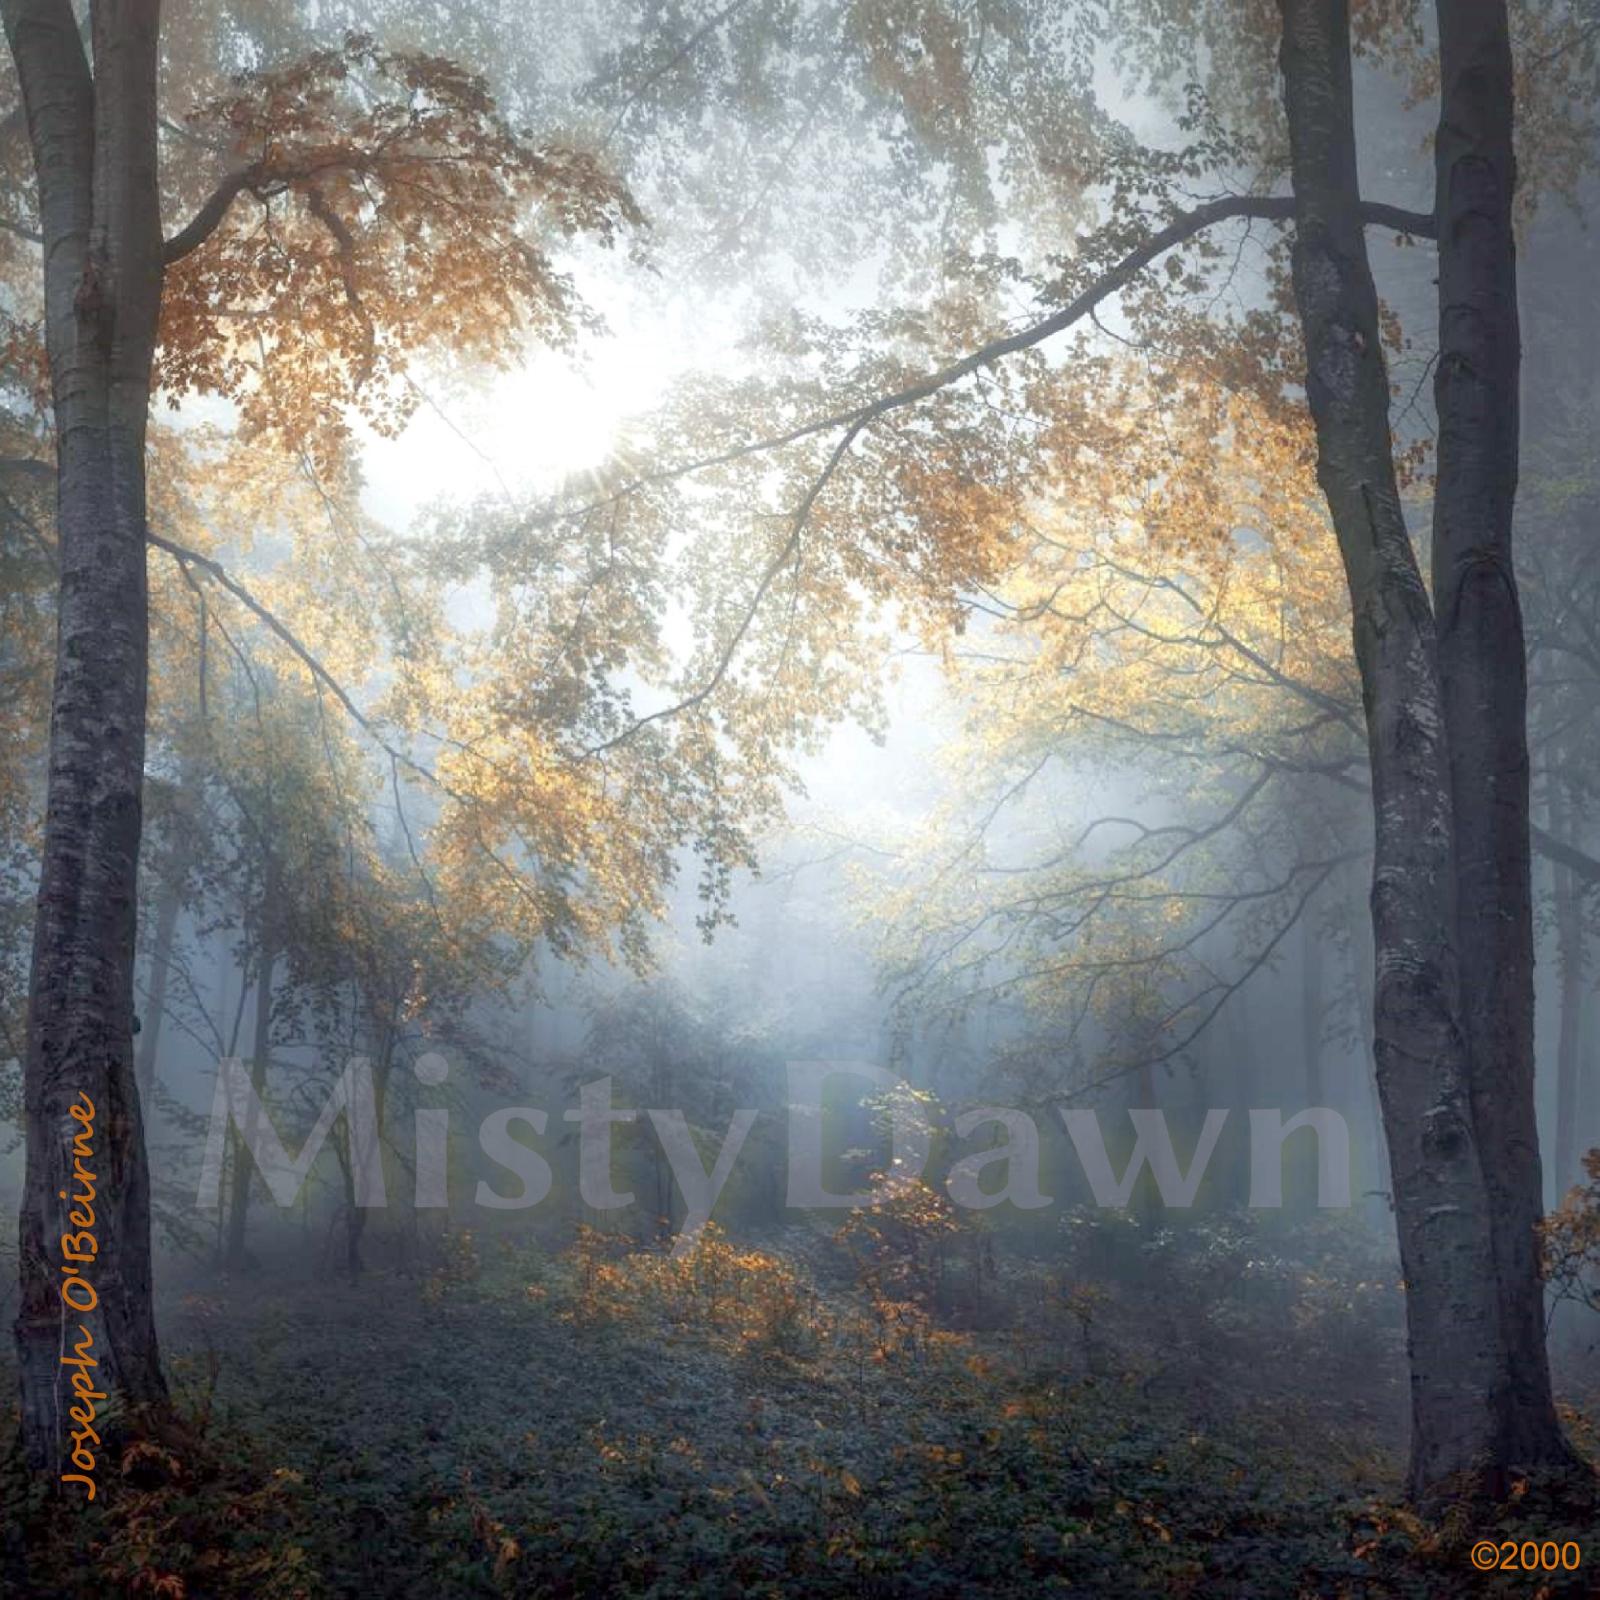 MistyDawn